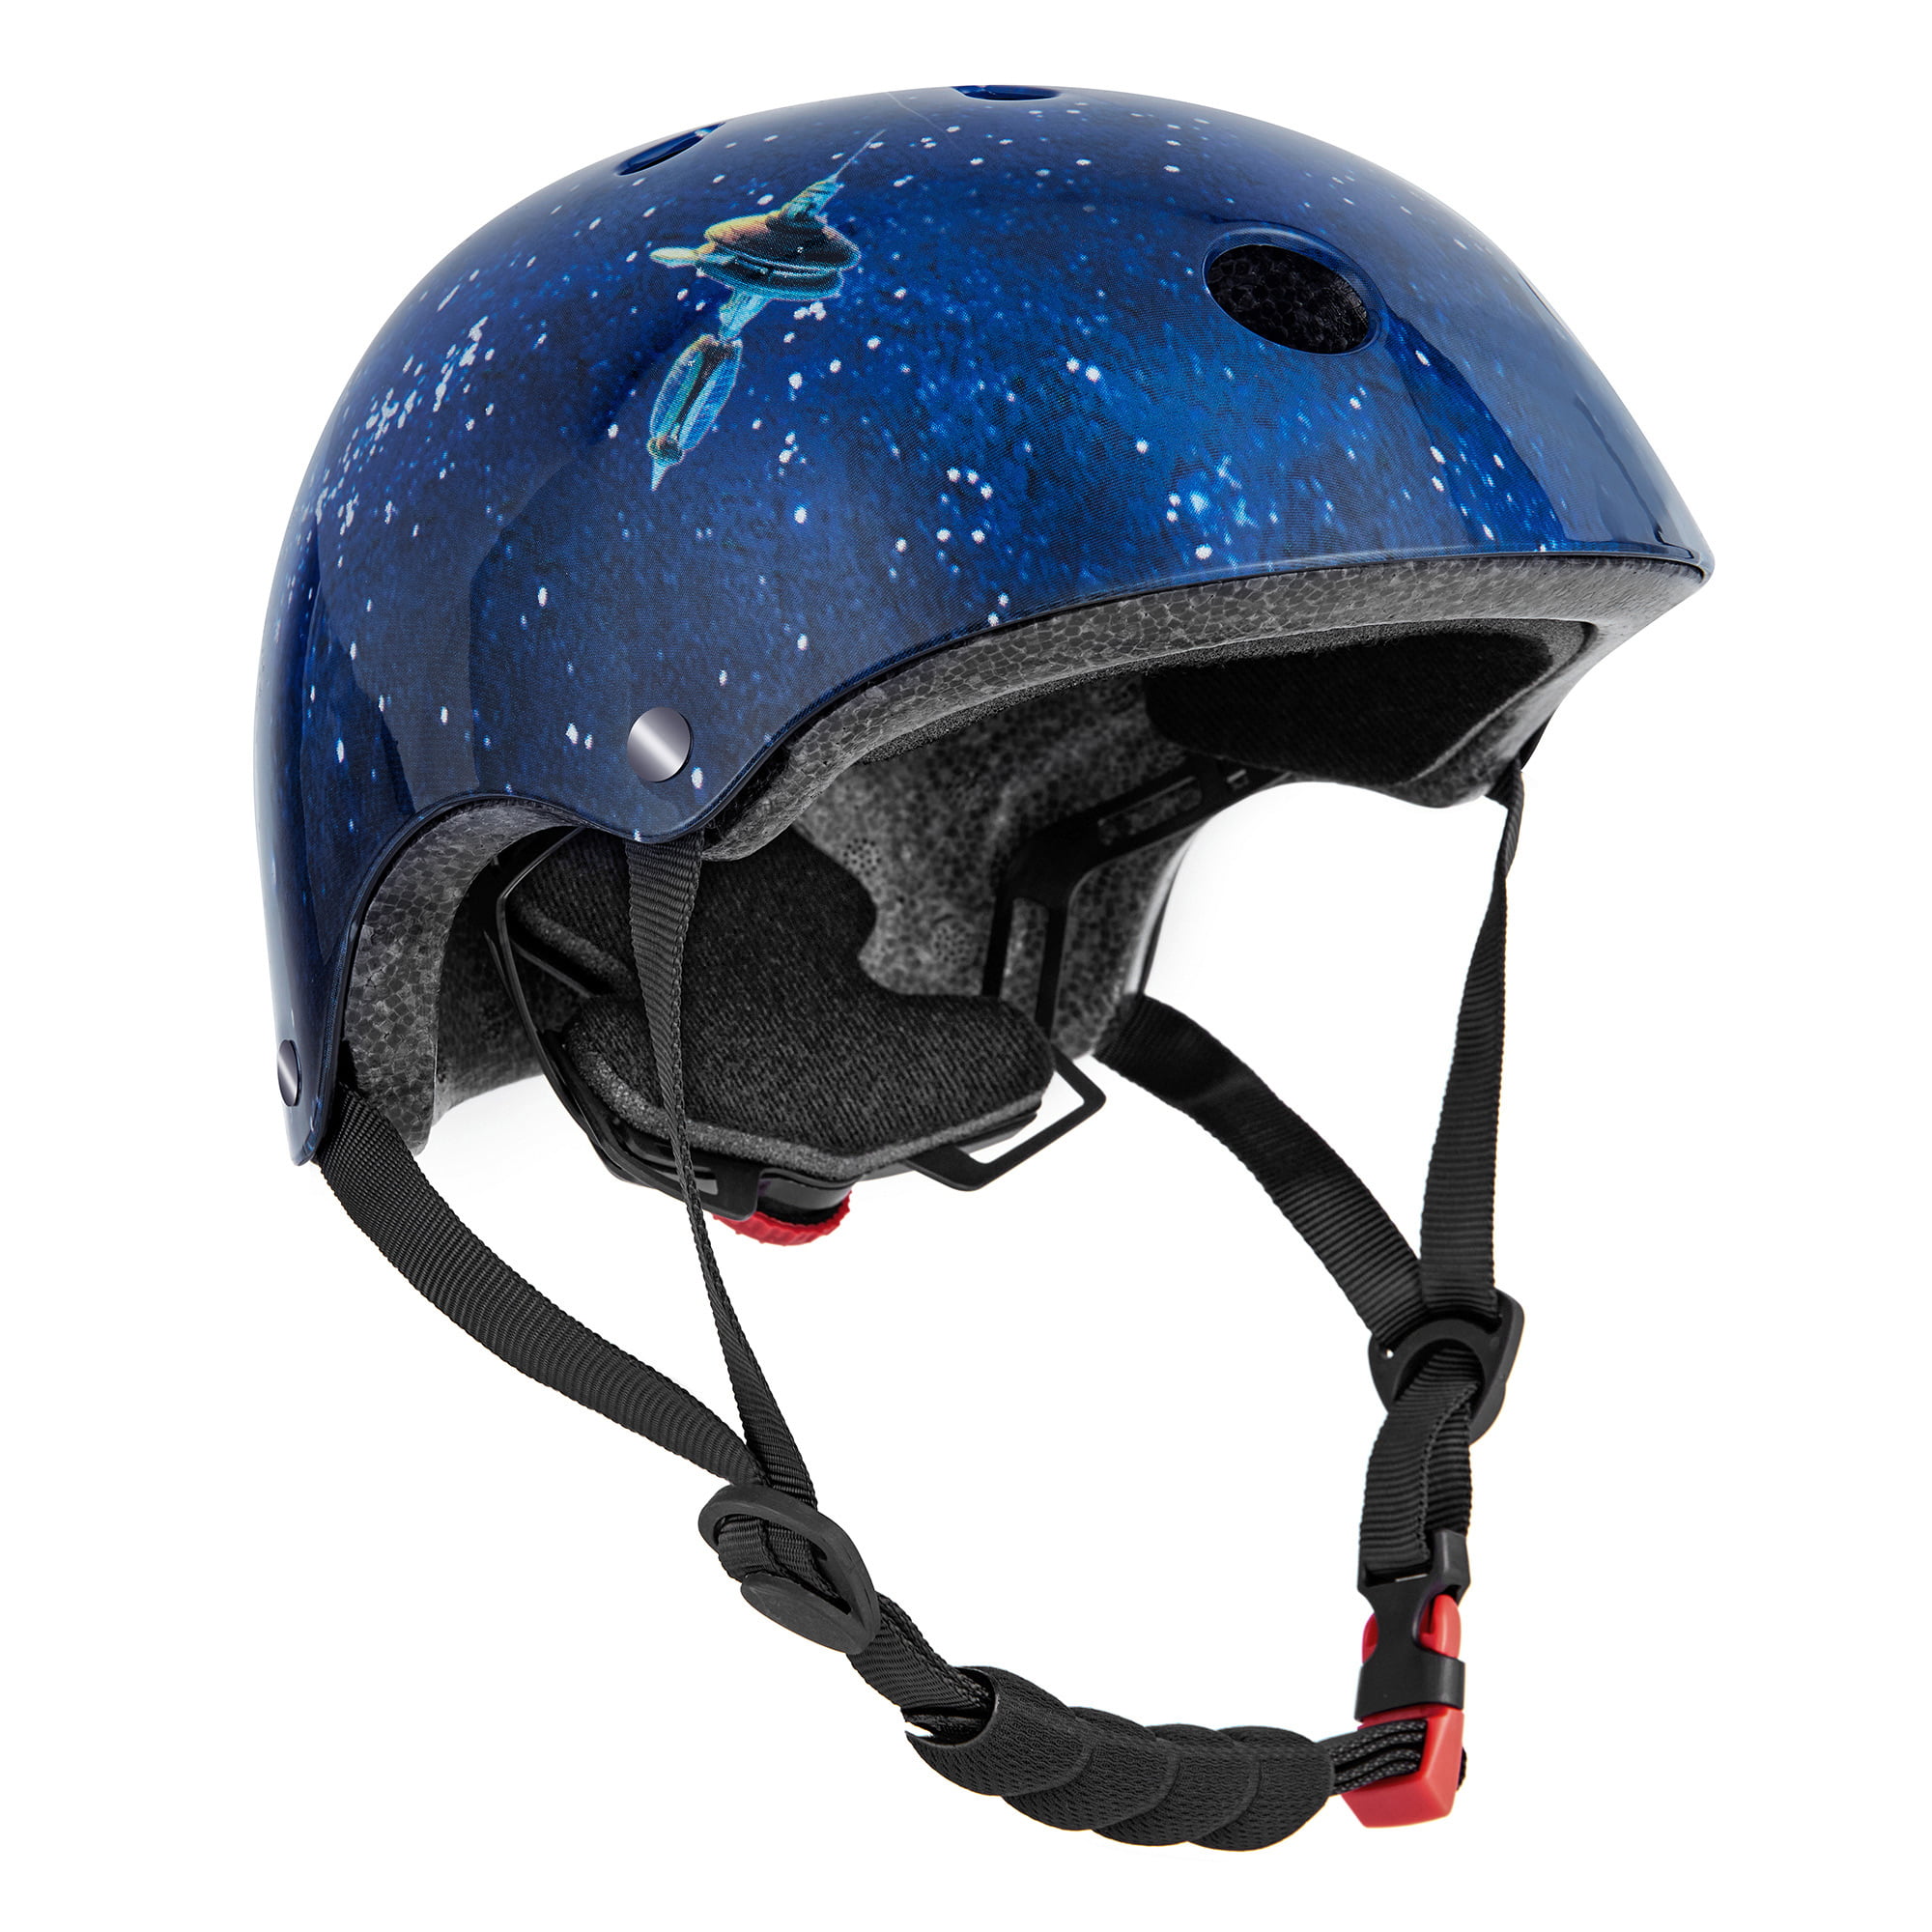 Details about   Kid Children Girls Bike Cycling Protective Scooter Skate Roller Safety Helmet I 